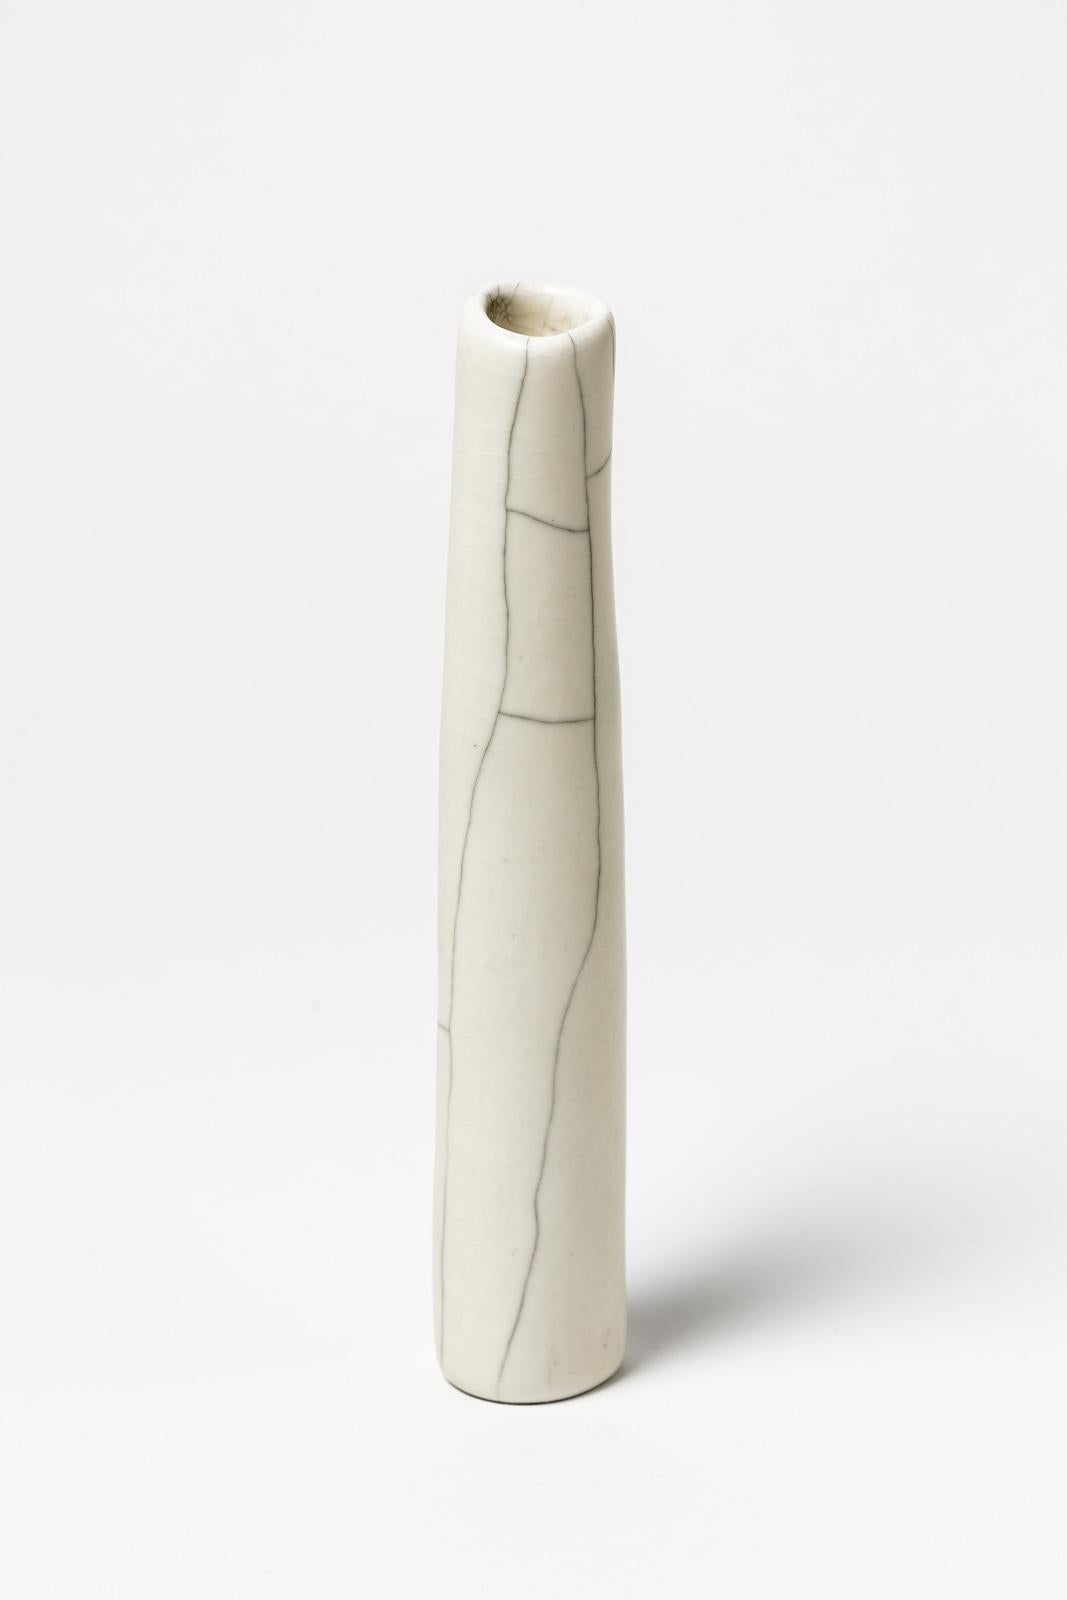 Contemporary White and Black Porcelain Freeform Sculpture Vase by Marc Uzan Midcentury For Sale